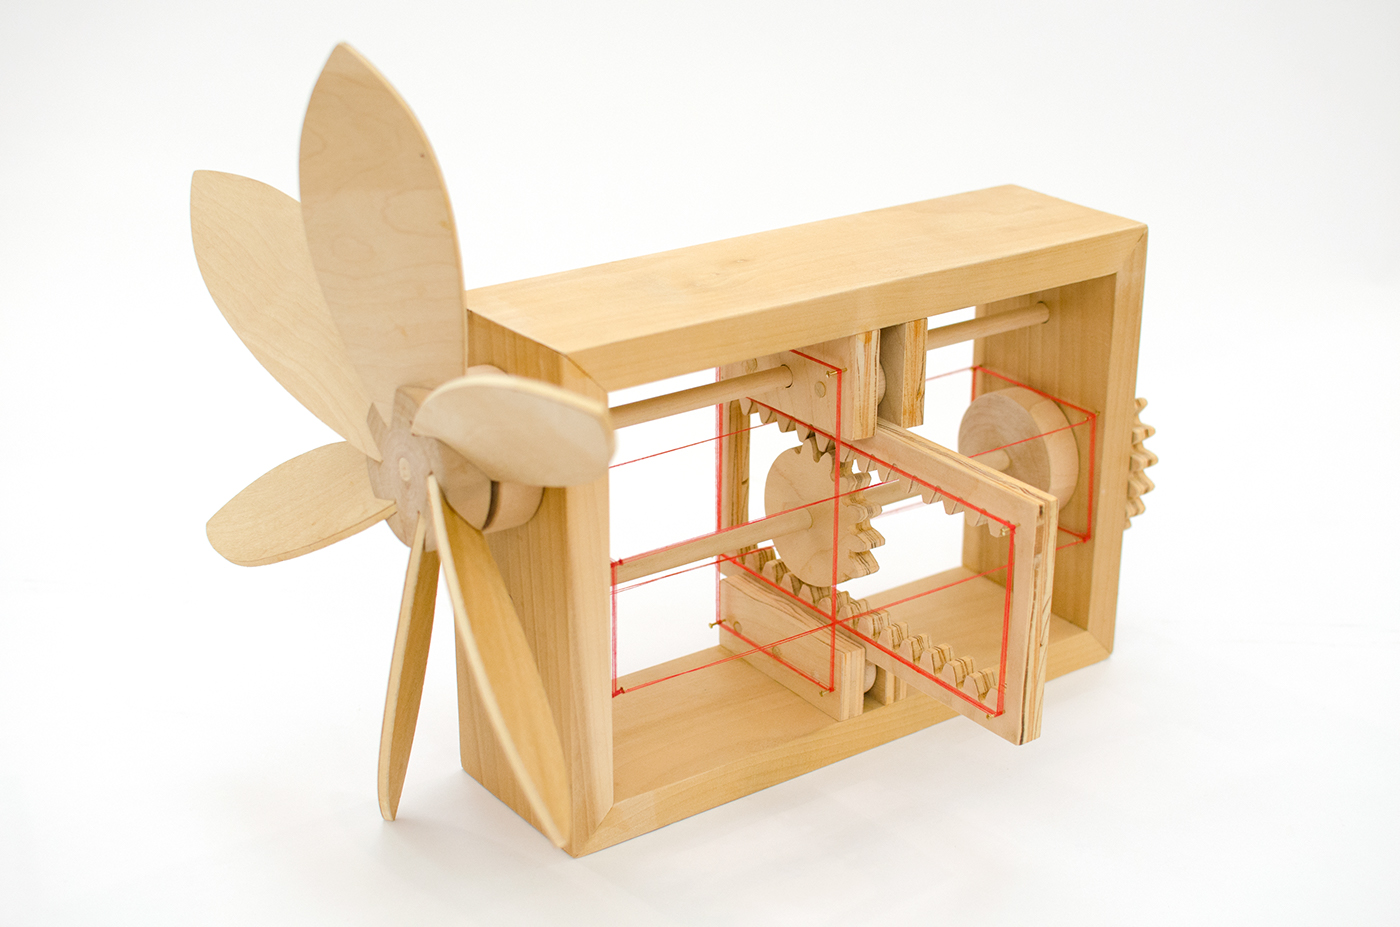 kinetic sculpture Tinkering Machine